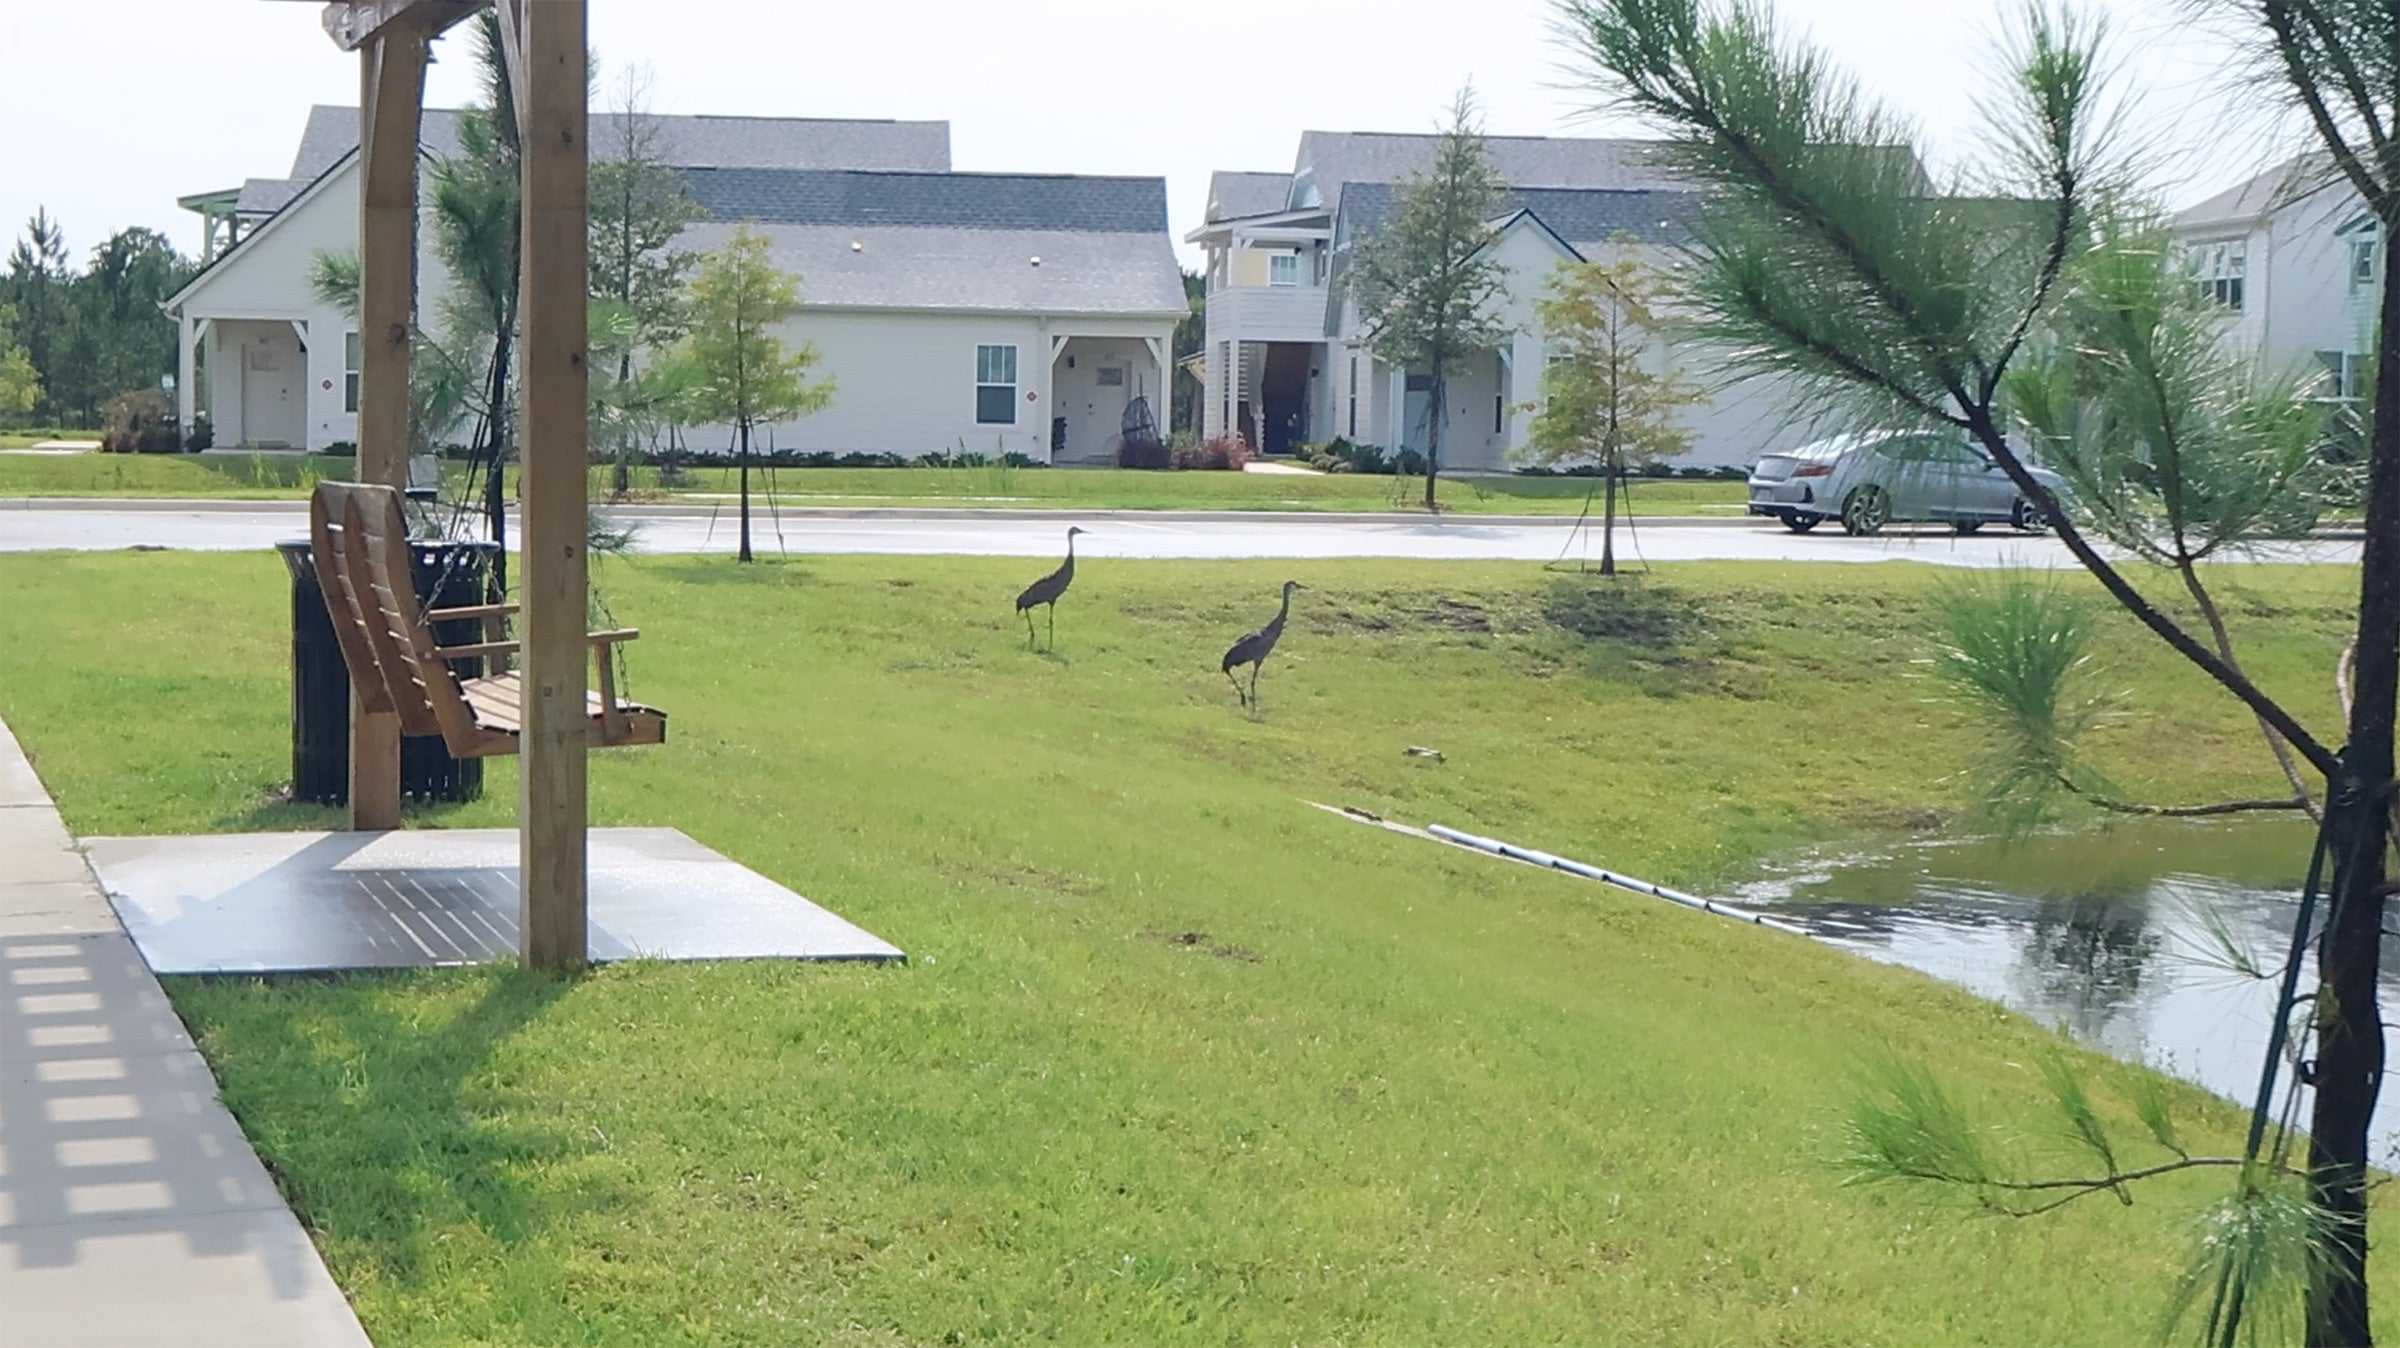 Two Sandhill Cranes walking through a neighborhood 